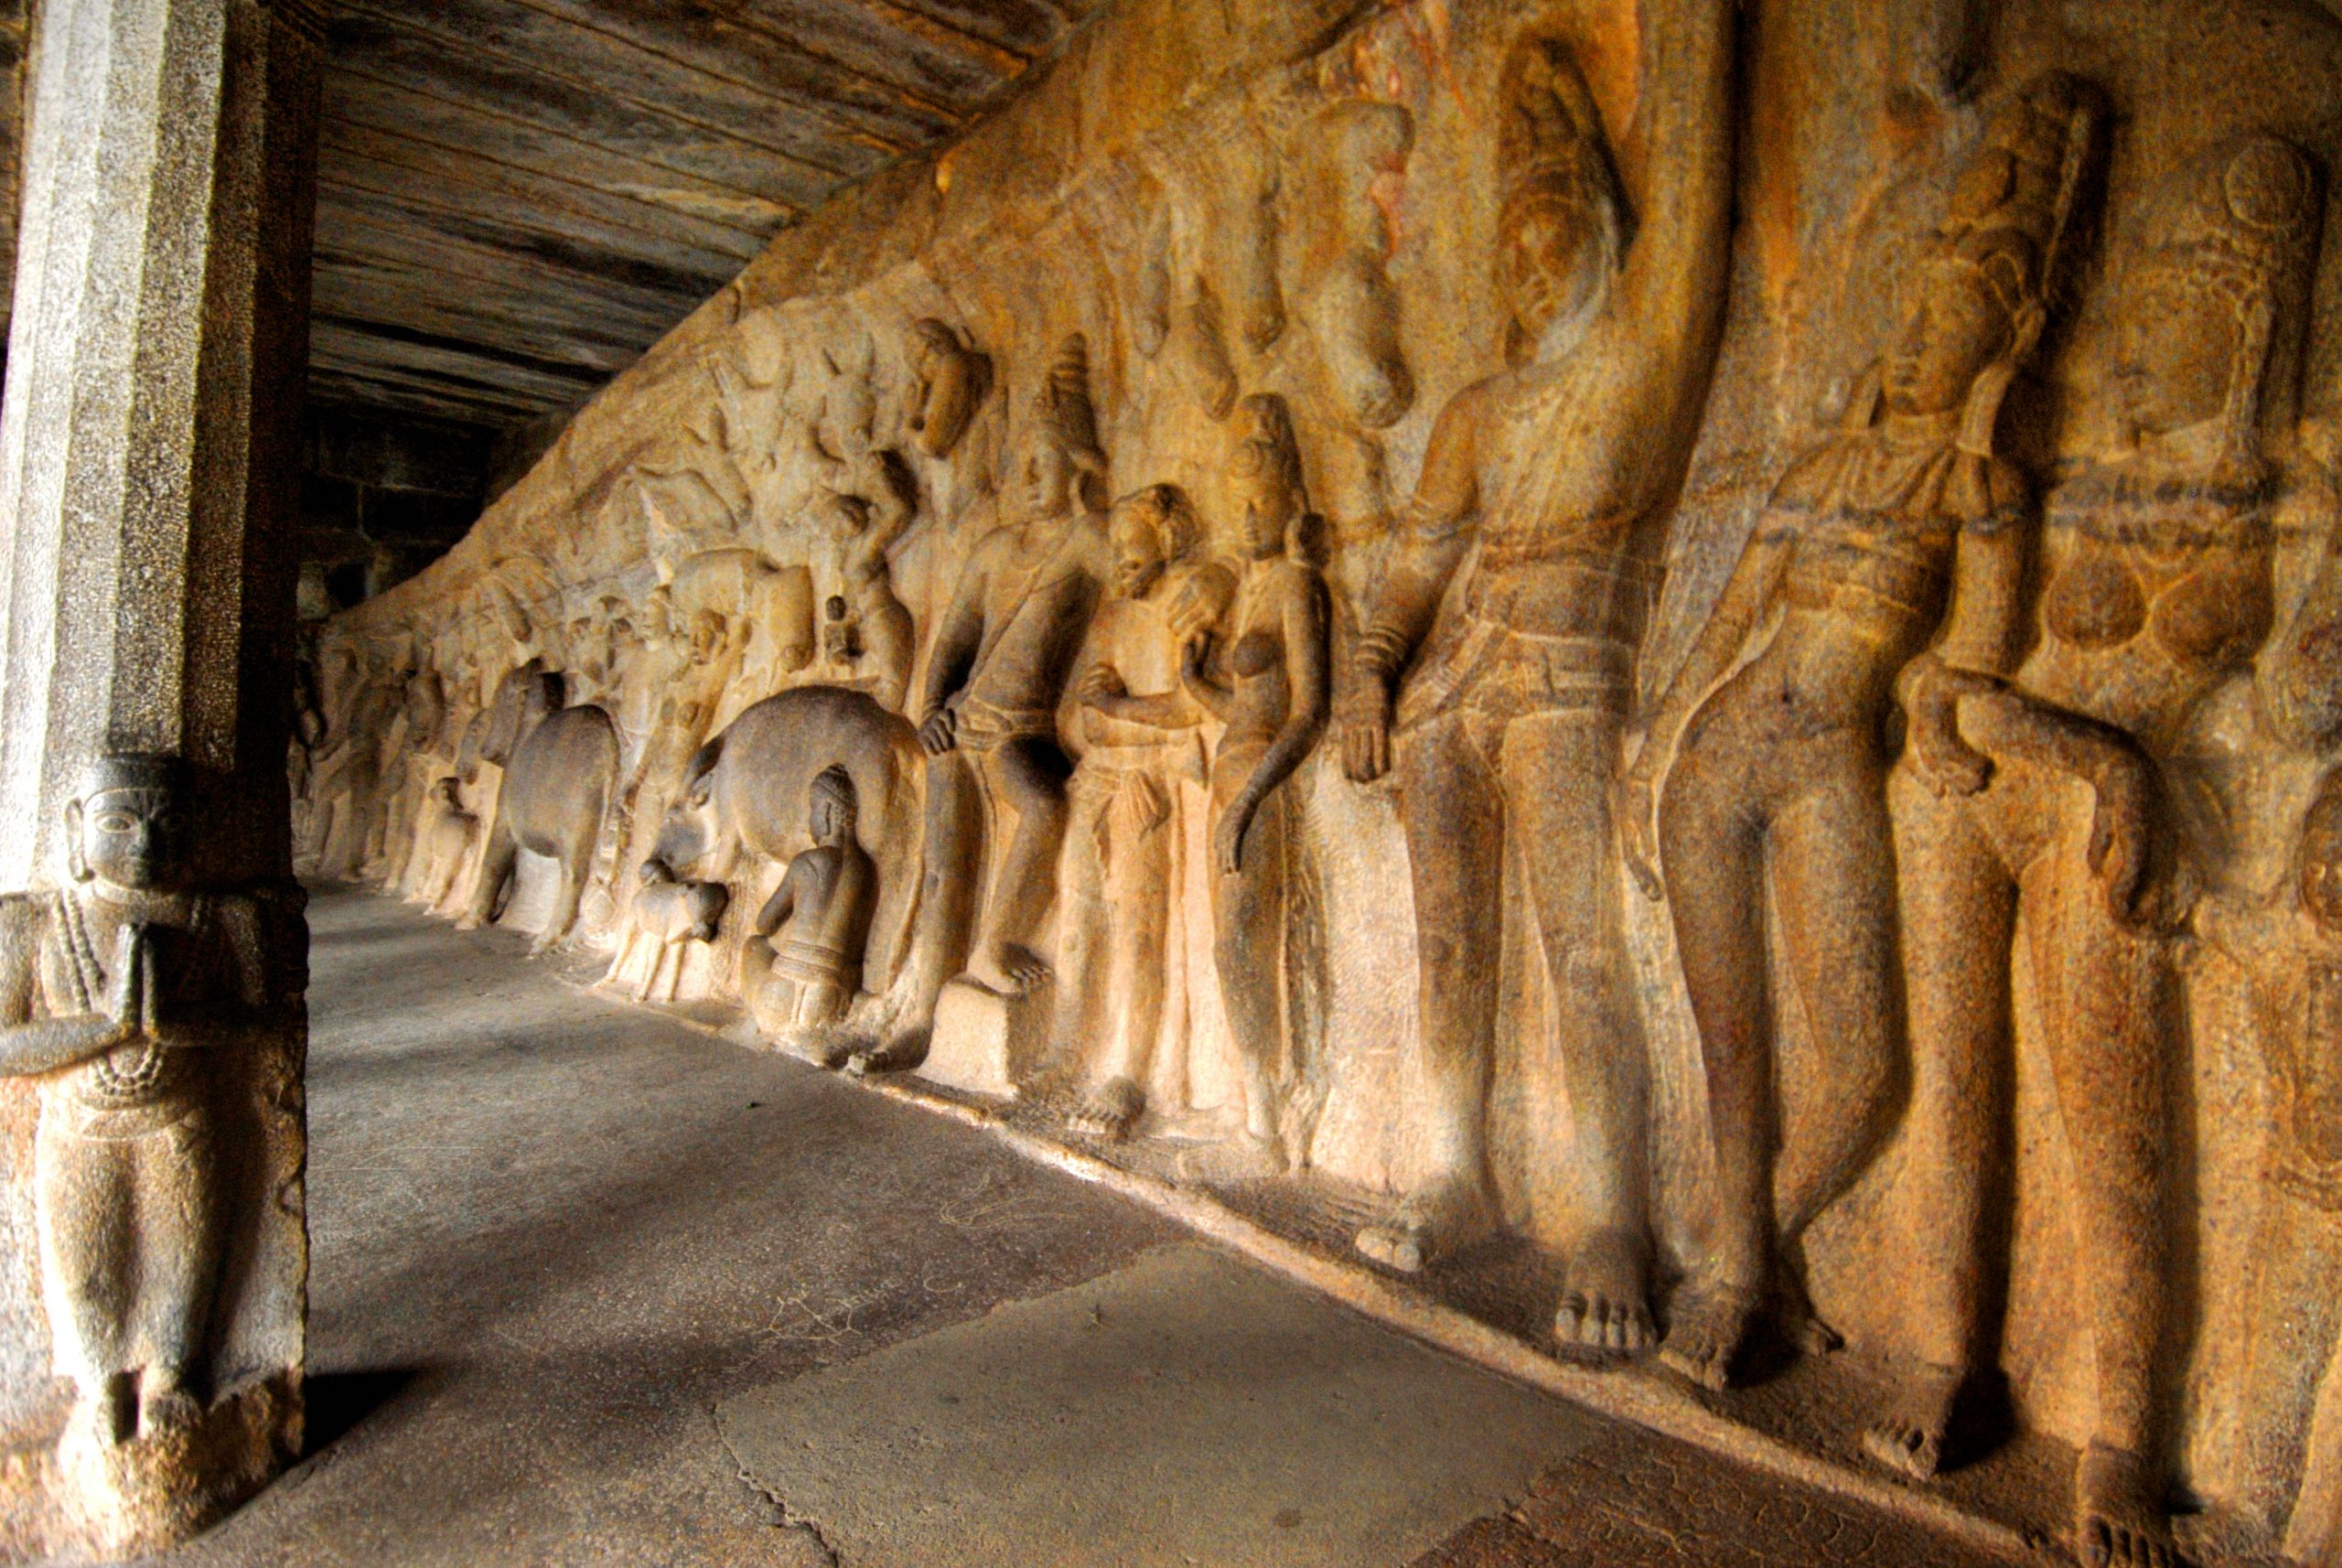 Sone carving o n the wall of a temple in Mahabalipuram.